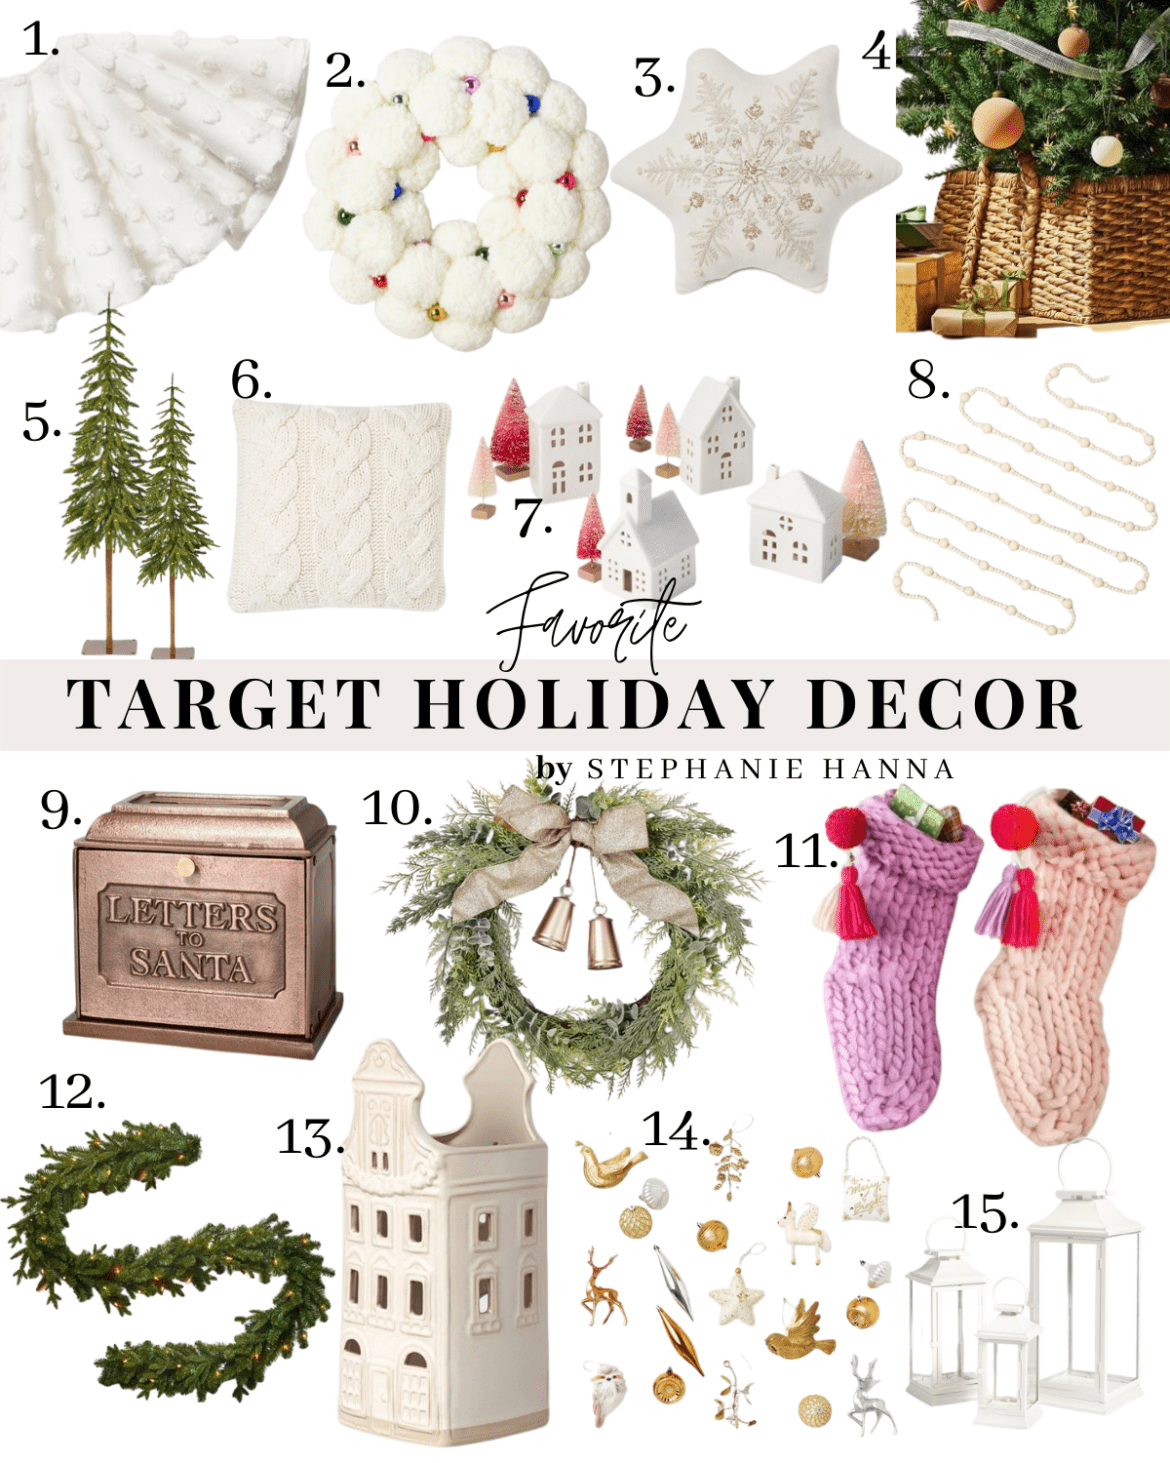 Target holiday decor, stockings, christmas tree, santa, star pillows, wreath, garland, candle house, santa letter